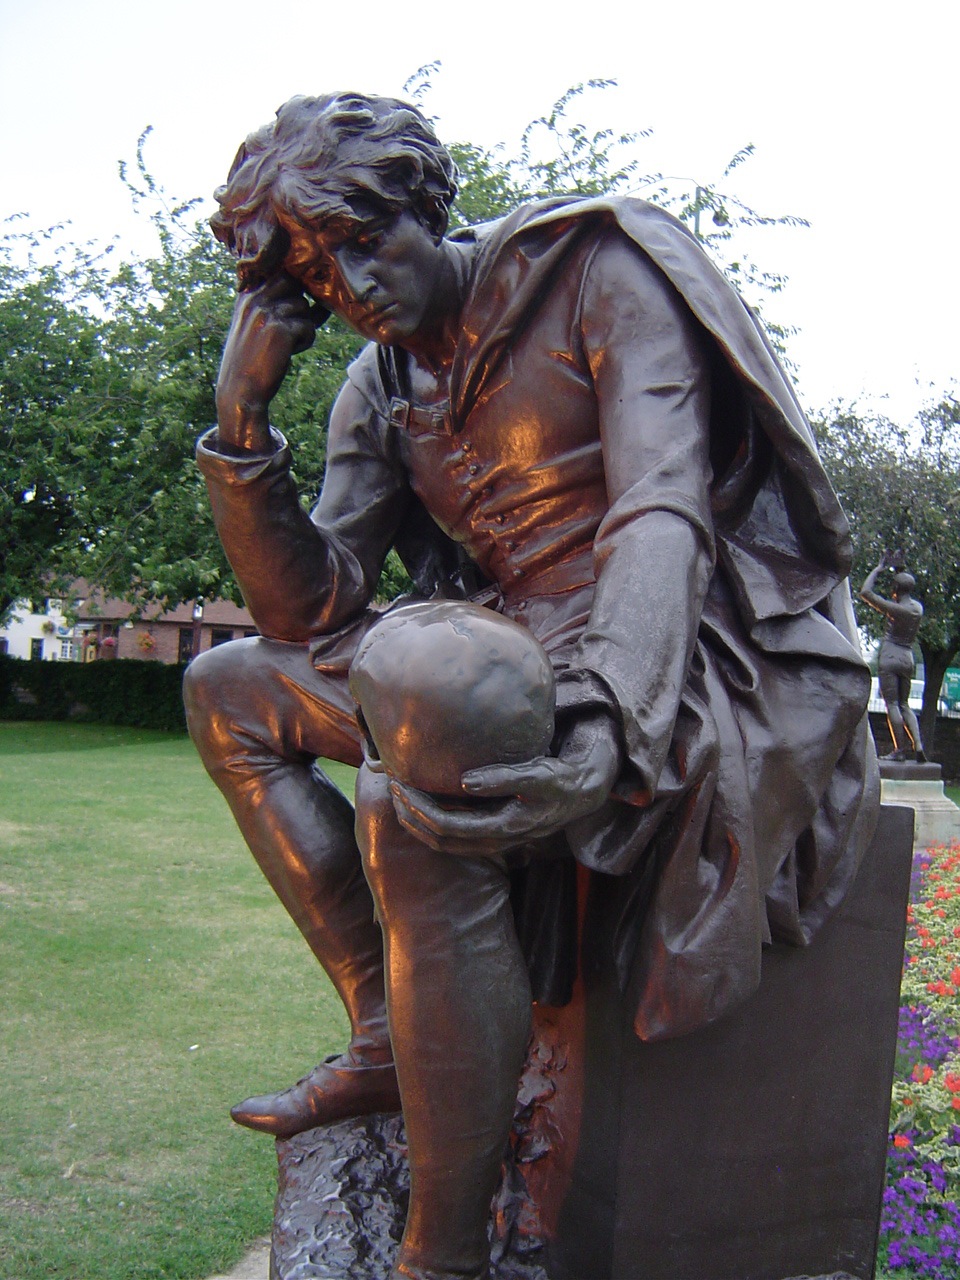 Lord Ronald Gower (British, 1845-1916) Hamlet (1888) Bronze. Life-size. Stratford-upon-Avon, United Kingdom. Photo via Wall Flower Gone Wild, Flickr.